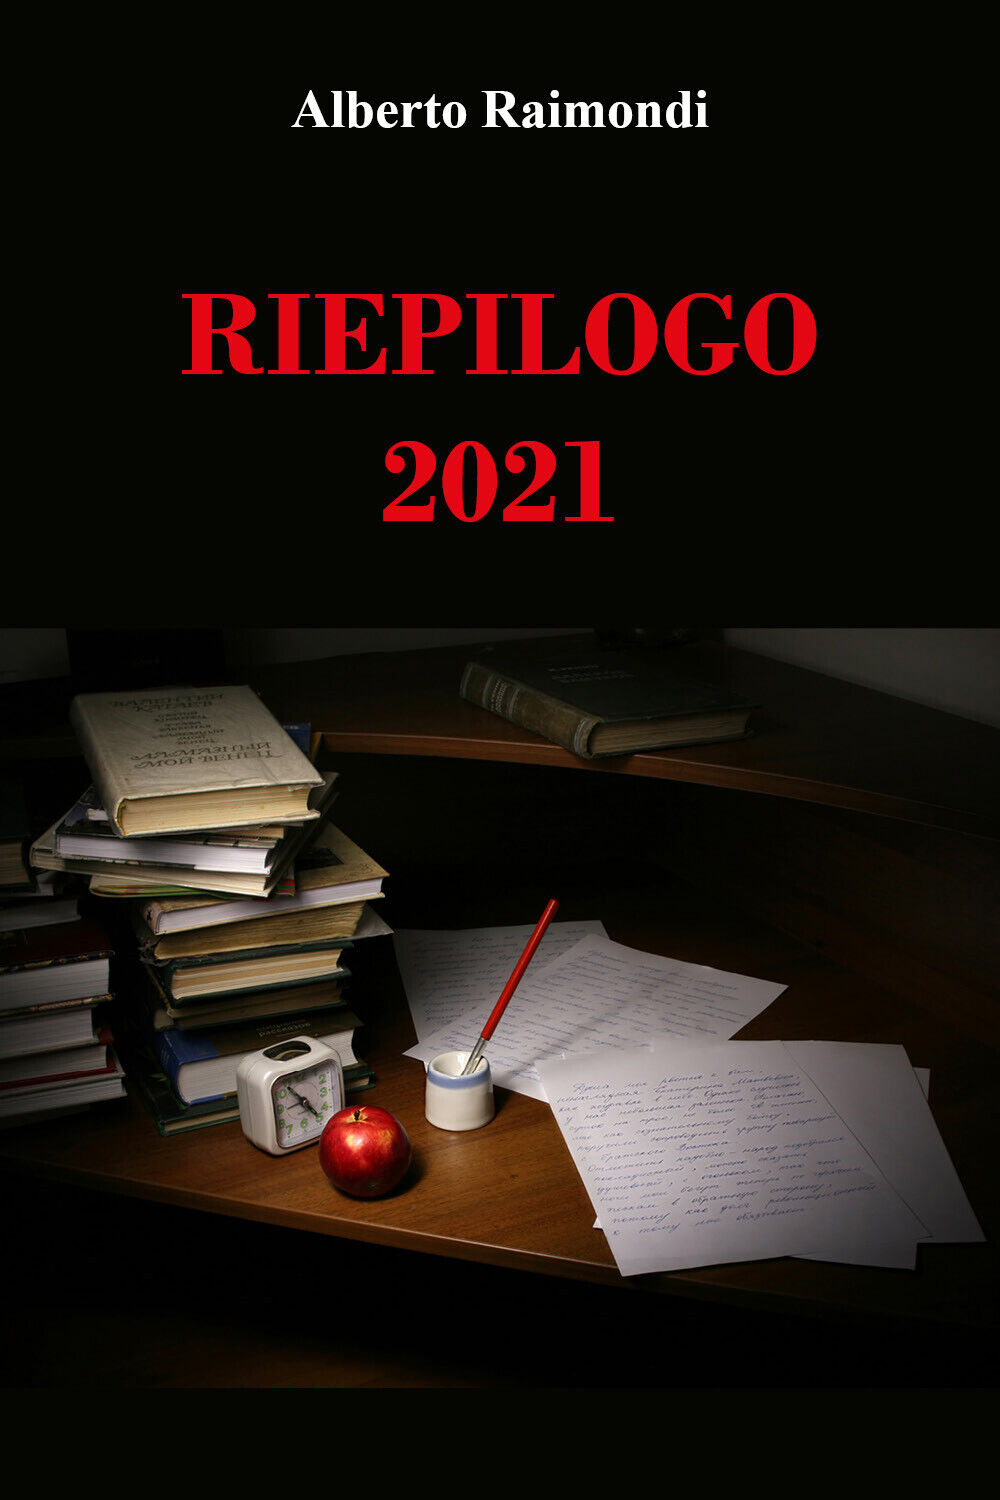 Riepilogo 2021 di Alberto Raimondi,  2021,  Youcanprint libro usato